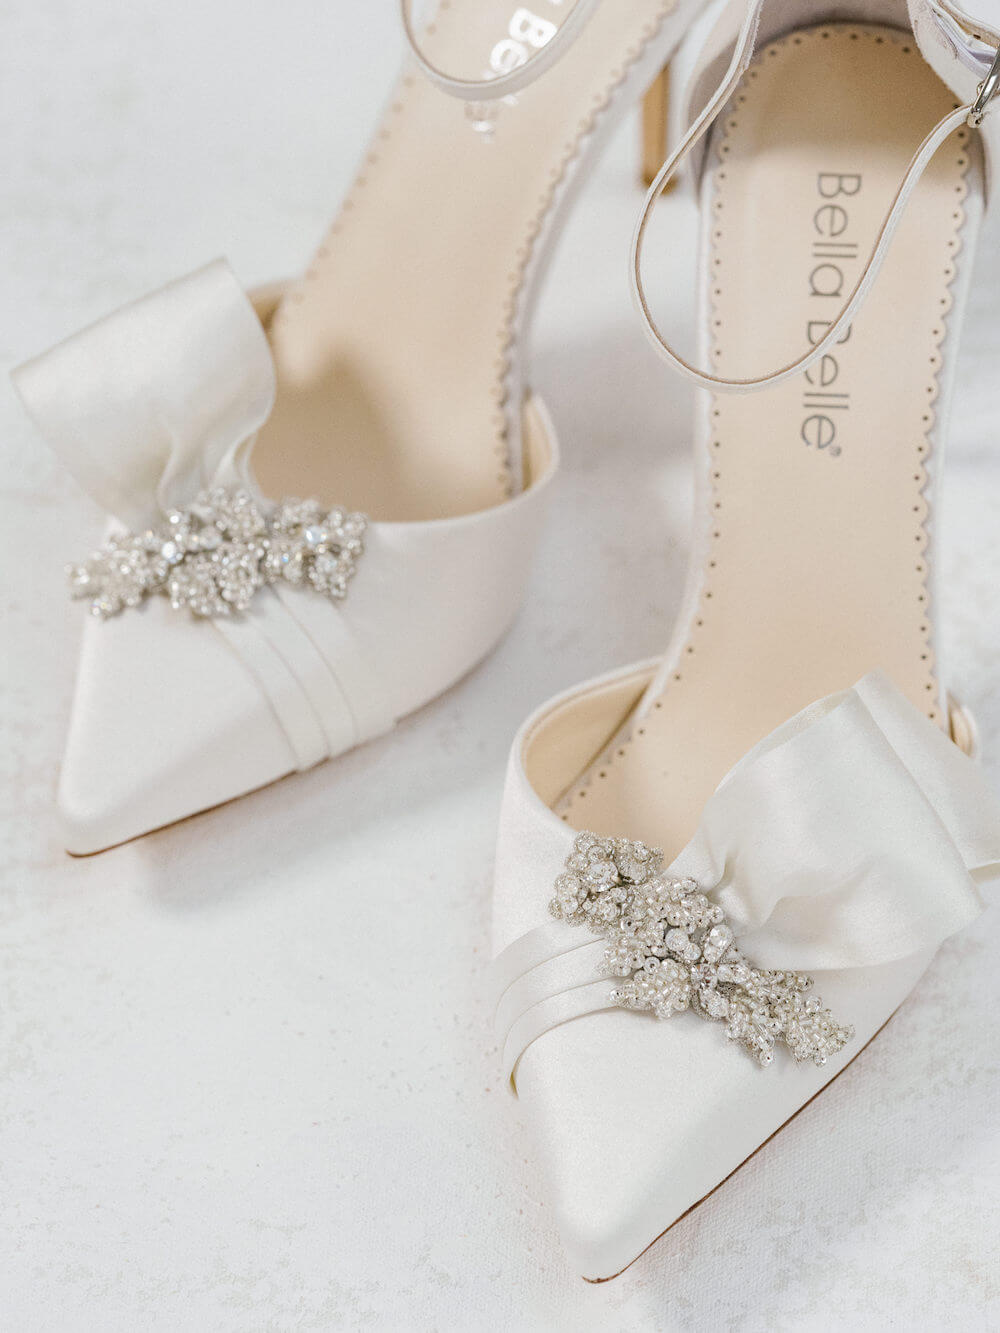 The 2022 Popular Wedding Shoes Trends | Bella Belle